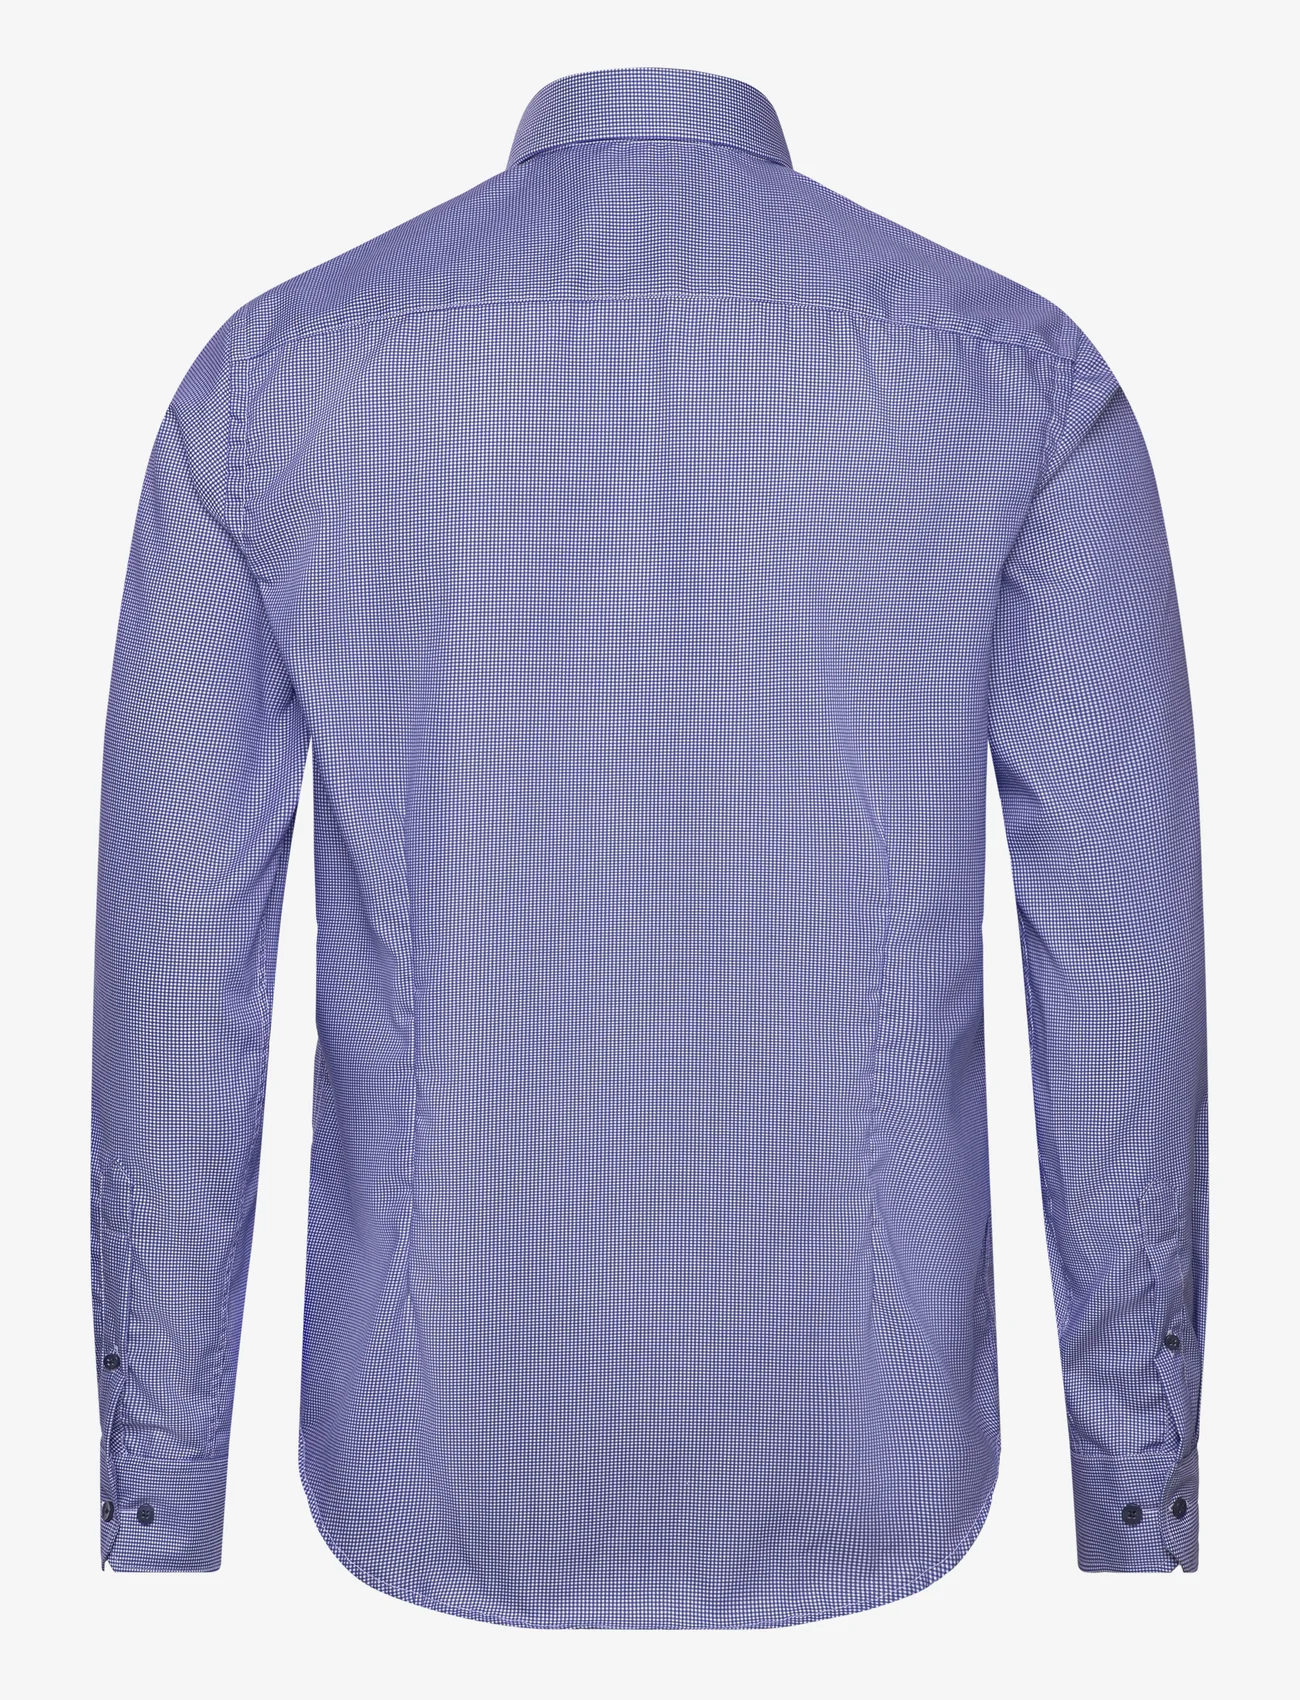 Bosweel Shirts Est. 1937 - Slim fit Mens shirt - penskjorter - blue - 1